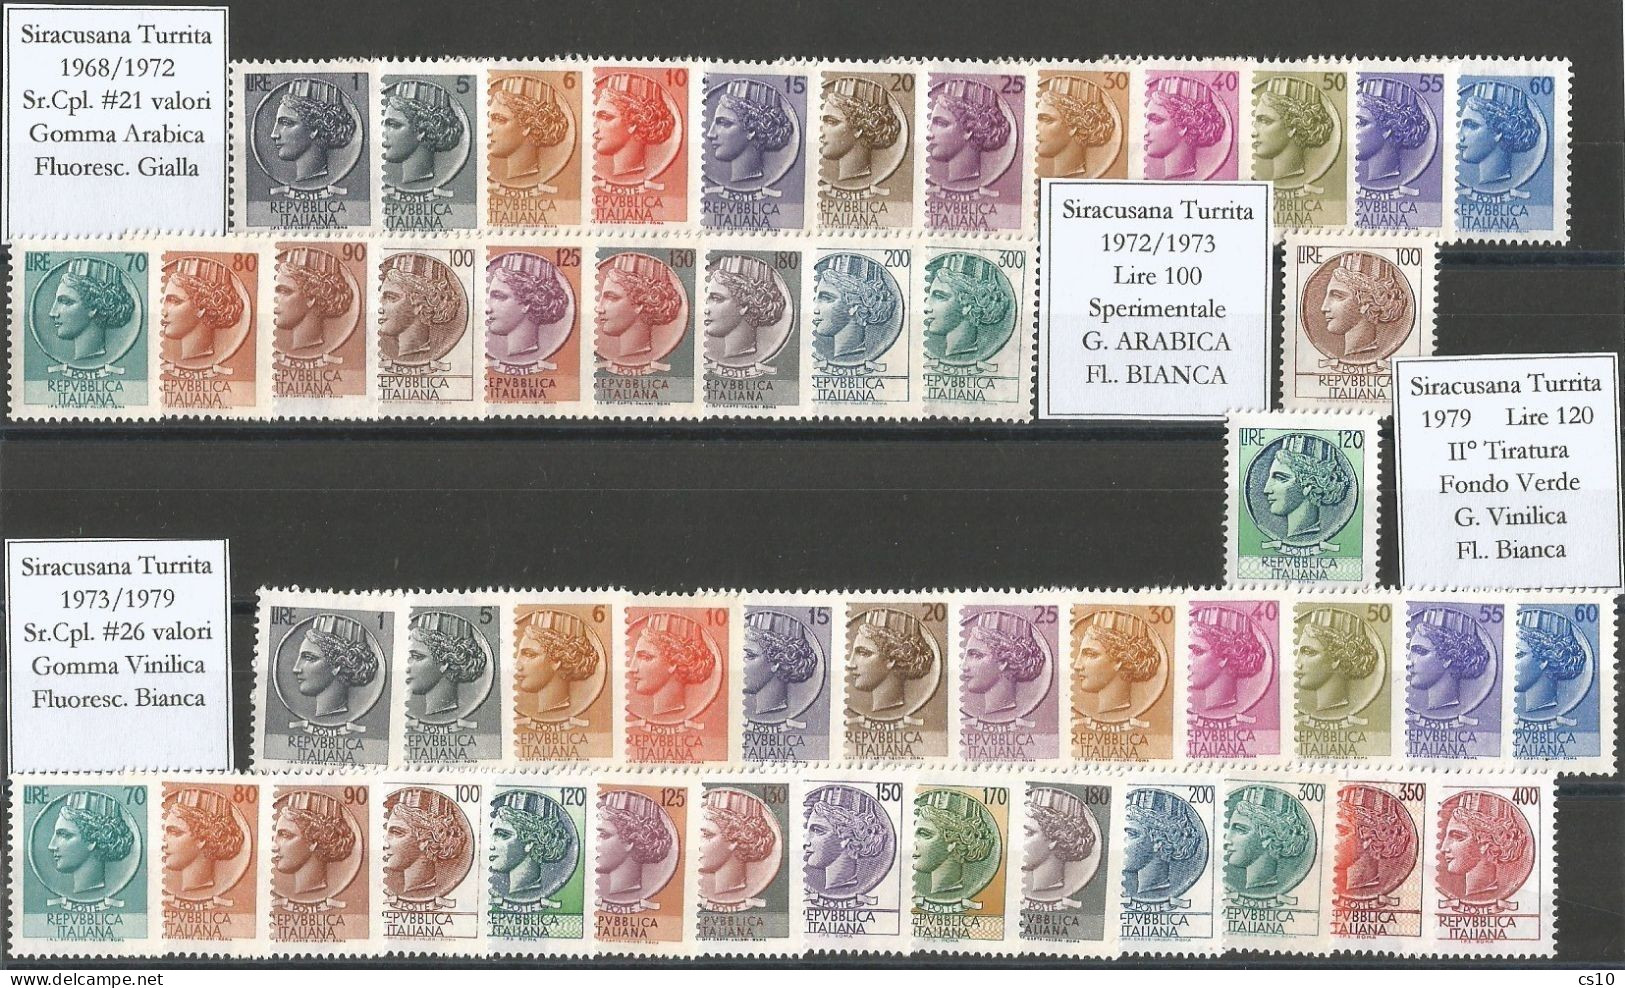 Turrita Syracuse Coin 1968/79 Emissione Cpl Issue Arabica 21v + Vinilica 26v + L.100 & L.120 II° Tiratura/2nd Print - 1971-80: Mint/hinged